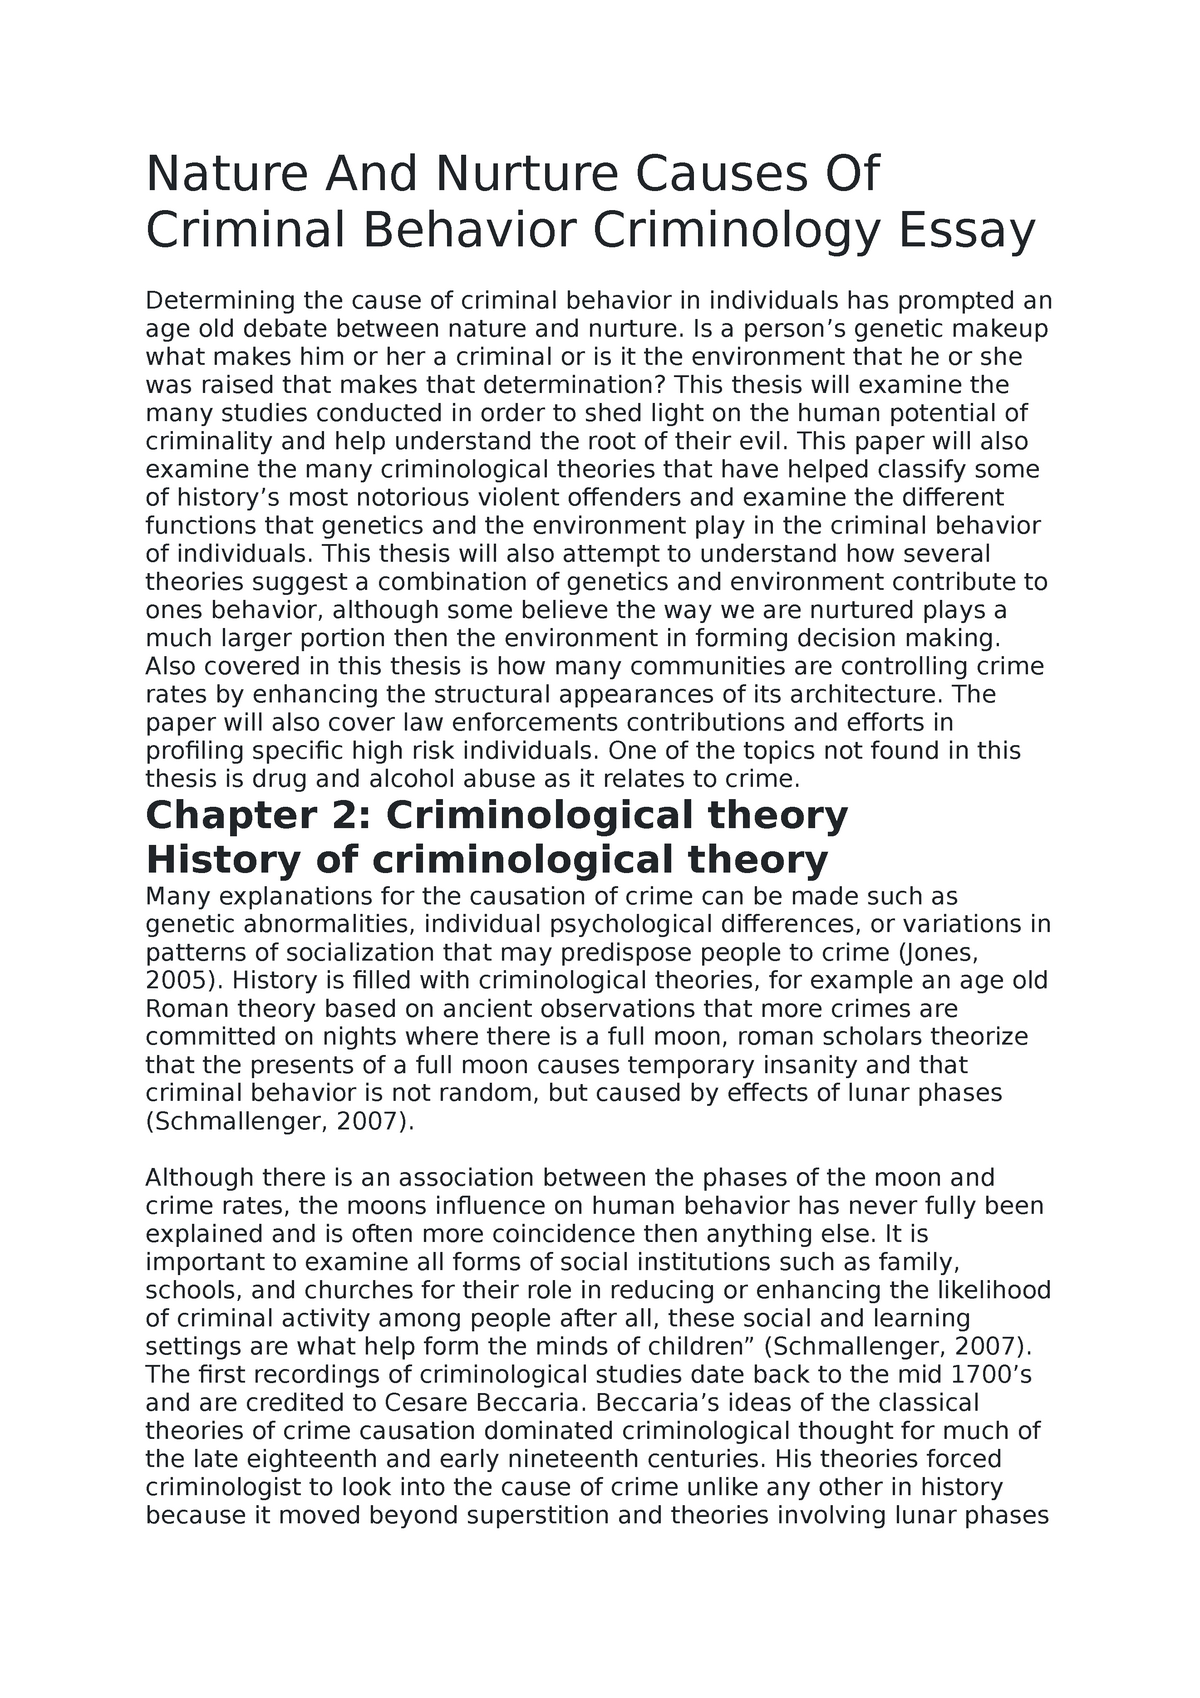 criminology essay